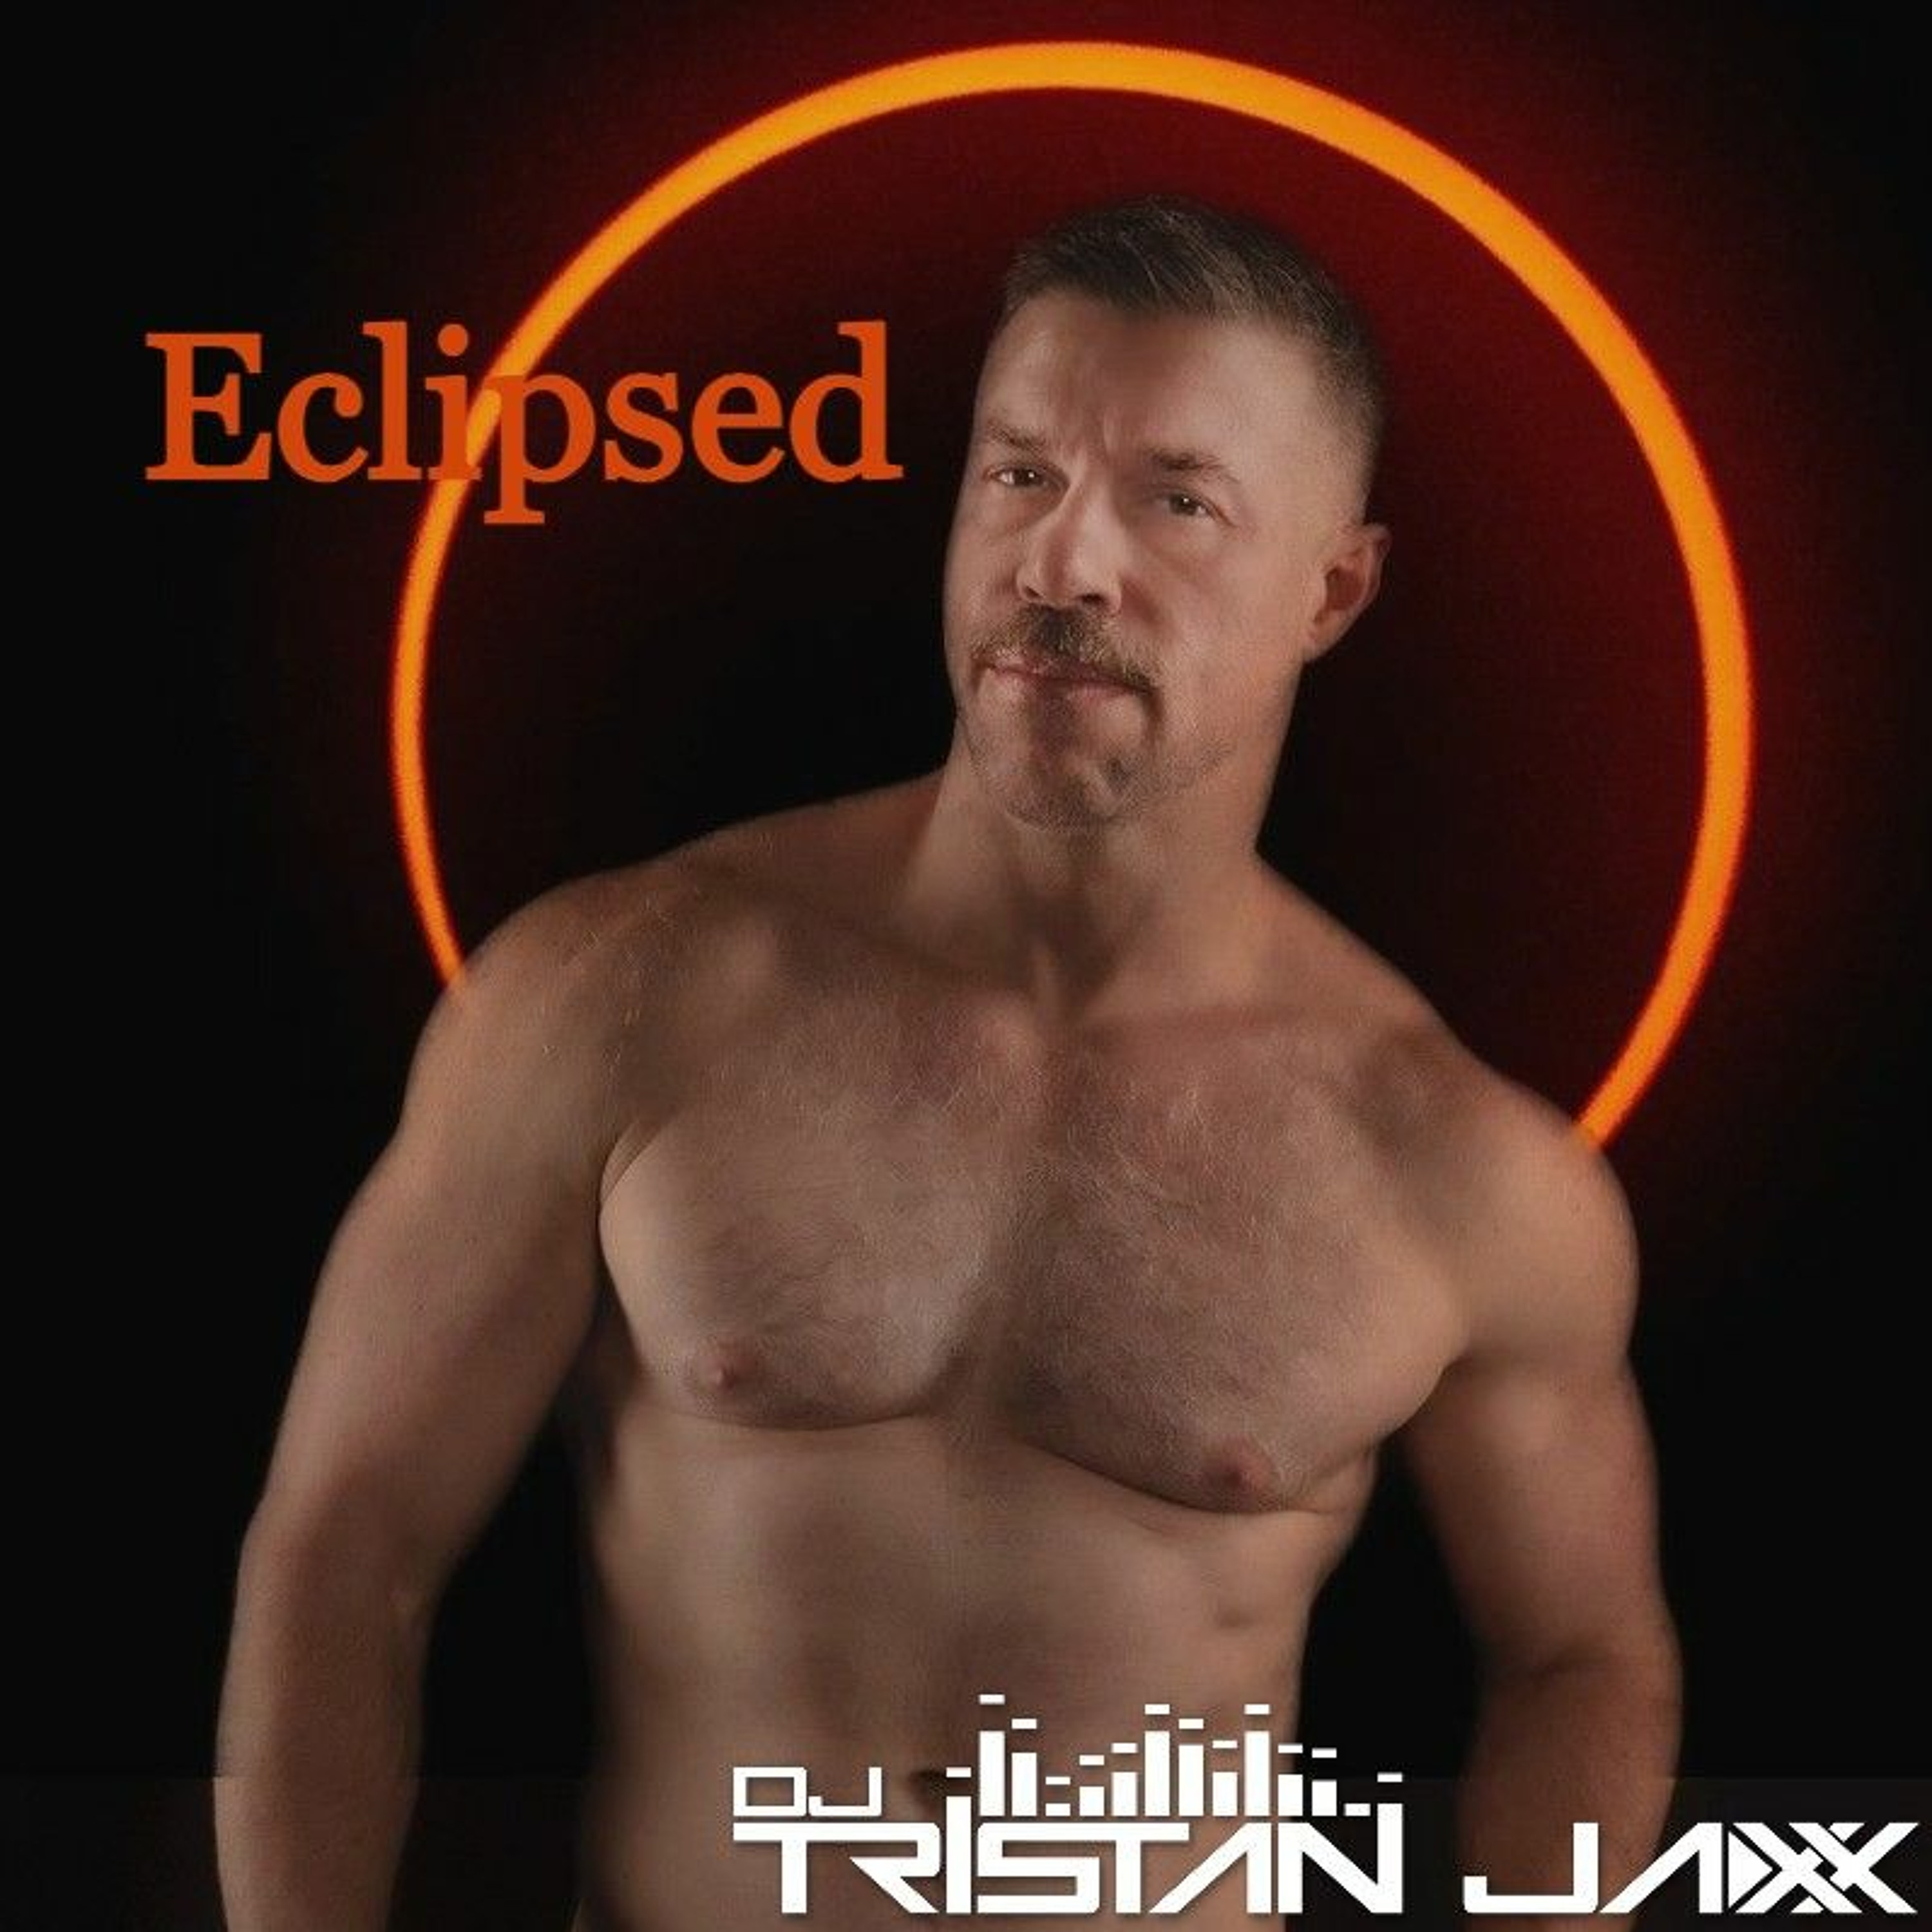 Eclipsed (Tristan Jaxx Live Set)